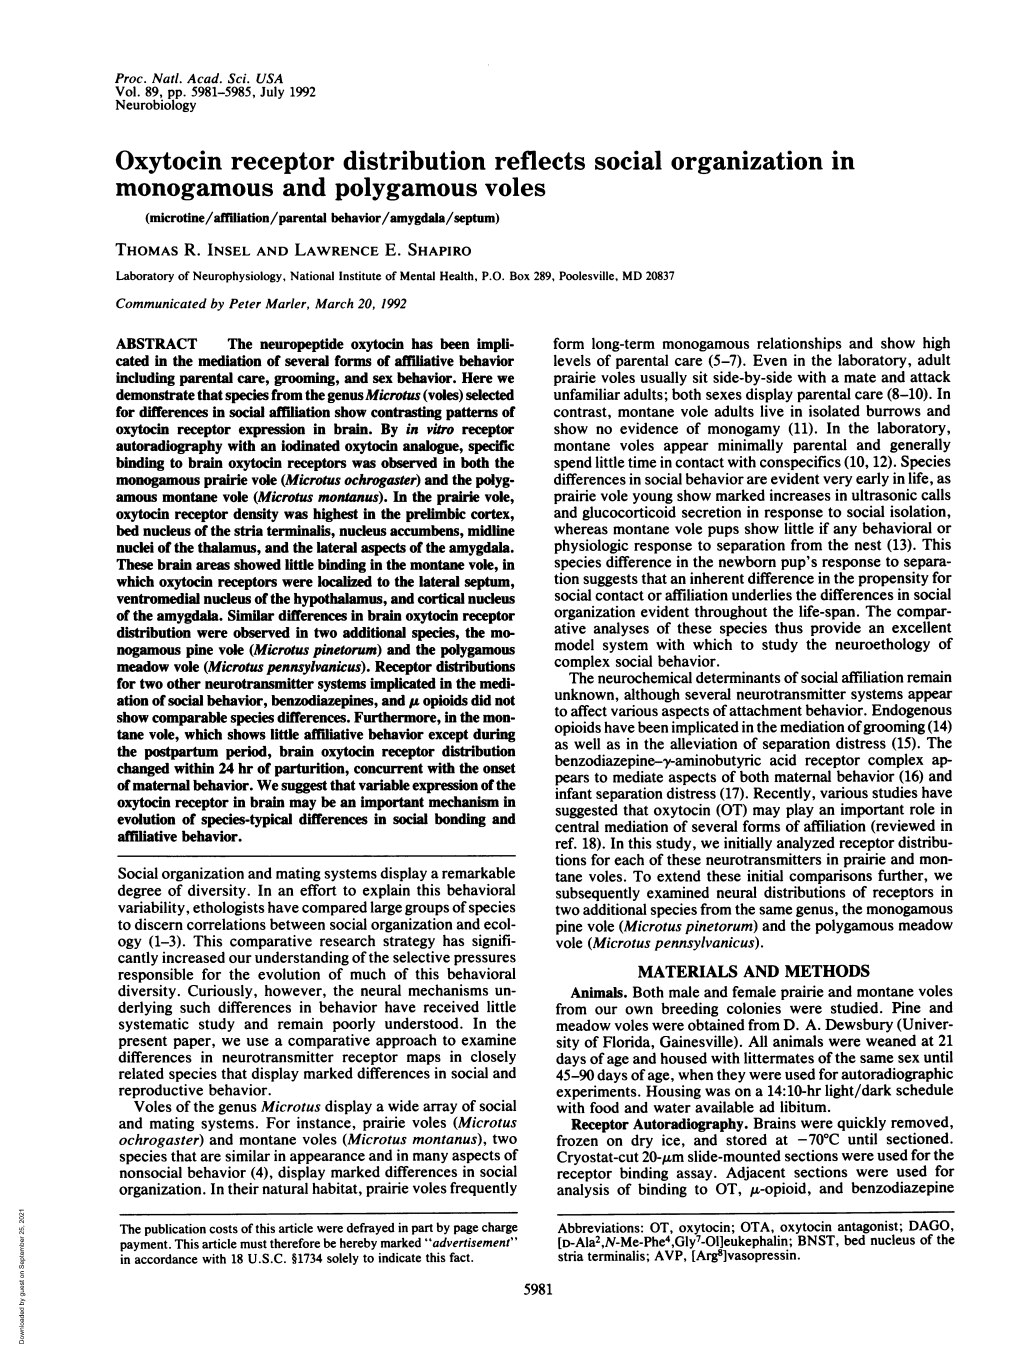 Oxytocin Receptor Distribution Reflects Social Organization in Monogamous and Polygamous Voles (Microtine/Affiliation/Parental Behavior/Amygdala/Septum) THOMAS R